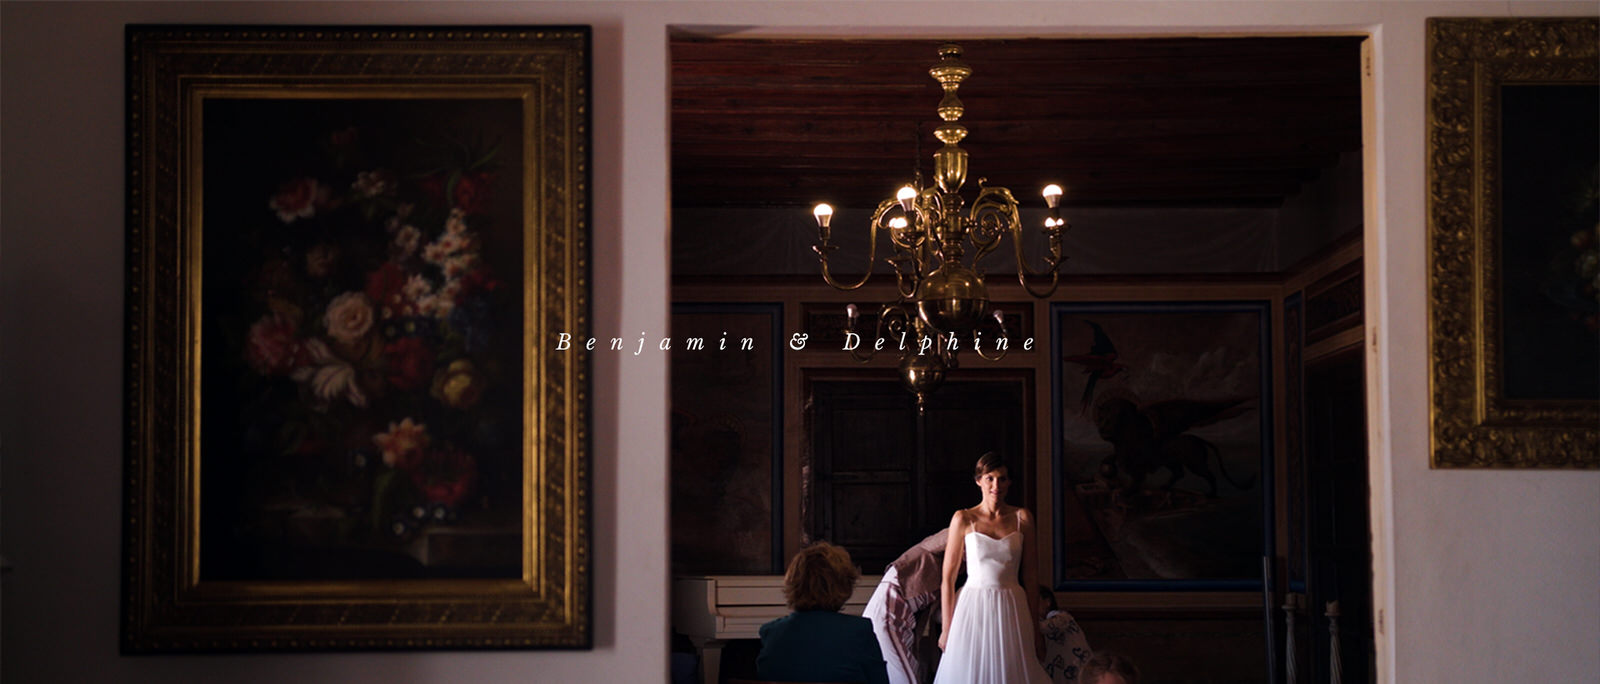 alicante-spain-destination-wedding-spanje-trouwfilm-videograaf-amsterdam-the-dreamers-trouwvideo-benjamin-delphine-italie-toscane-damon12-1